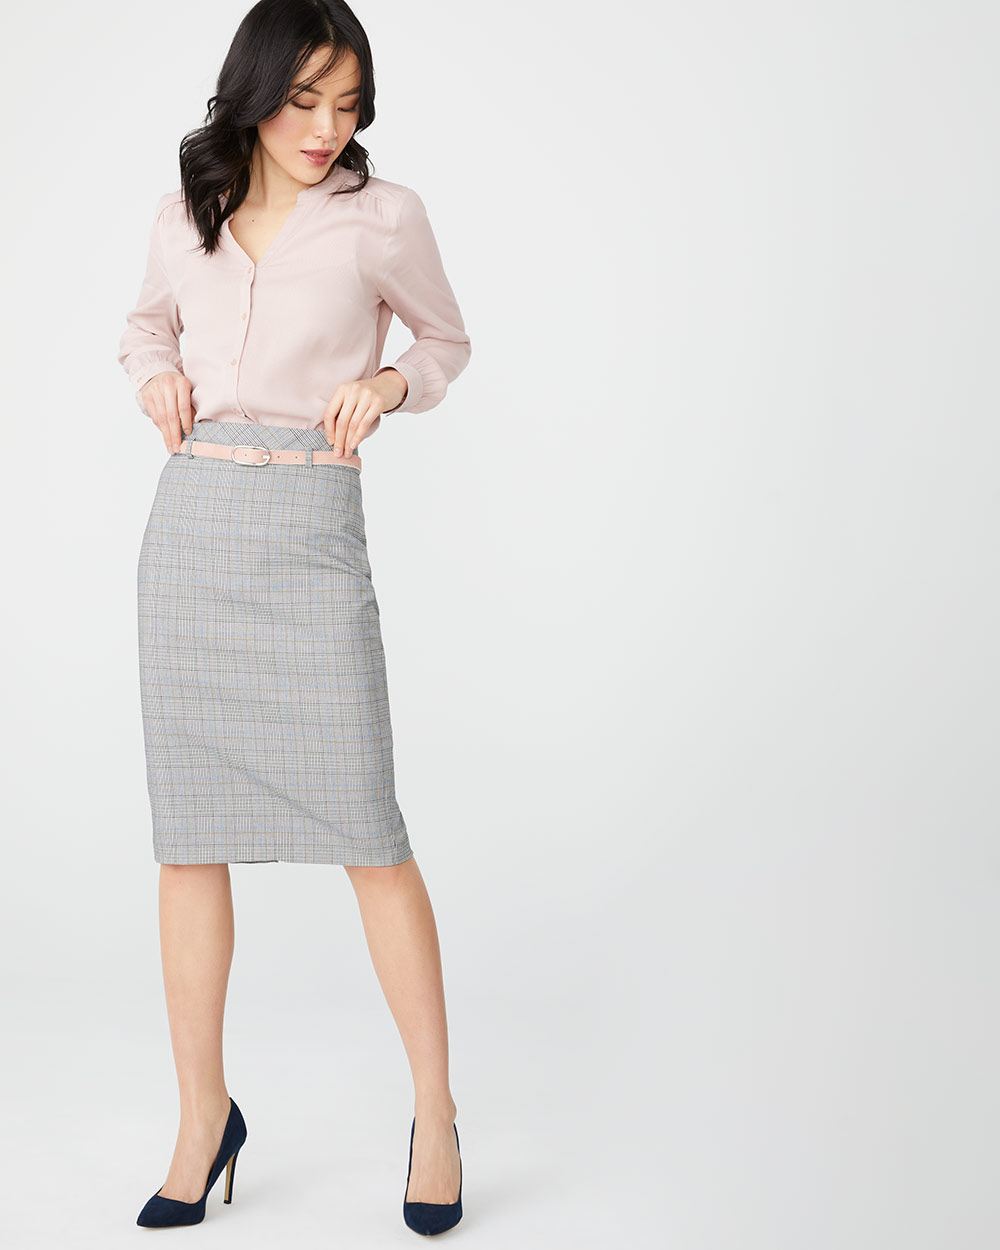 High-waist three-tone plaid pencil skirt | RW&CO.